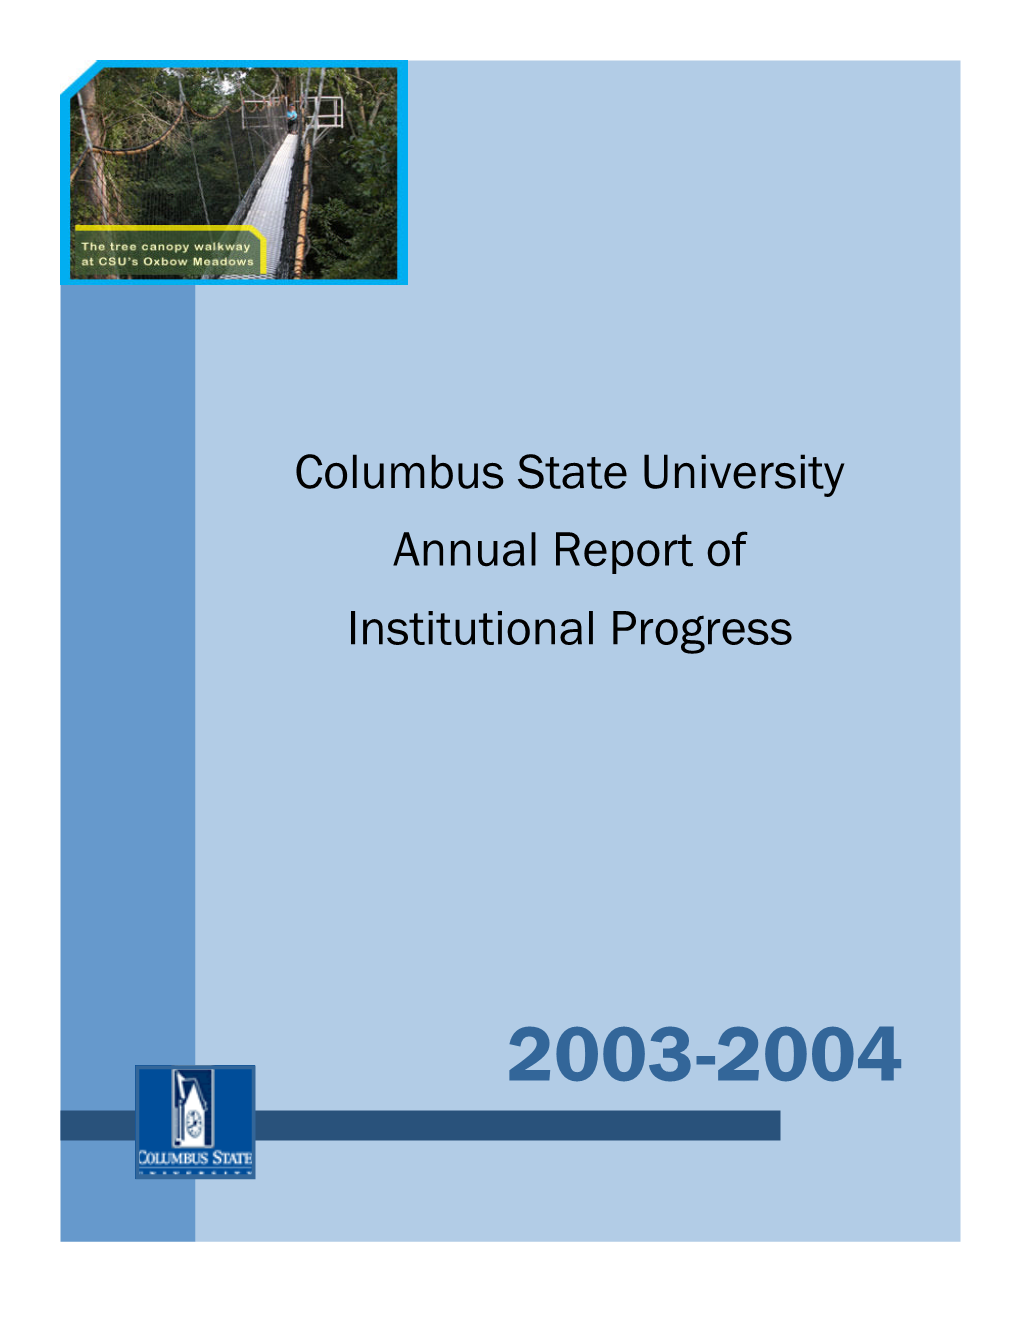 Columbus State University Annual Report of Institutional Progress